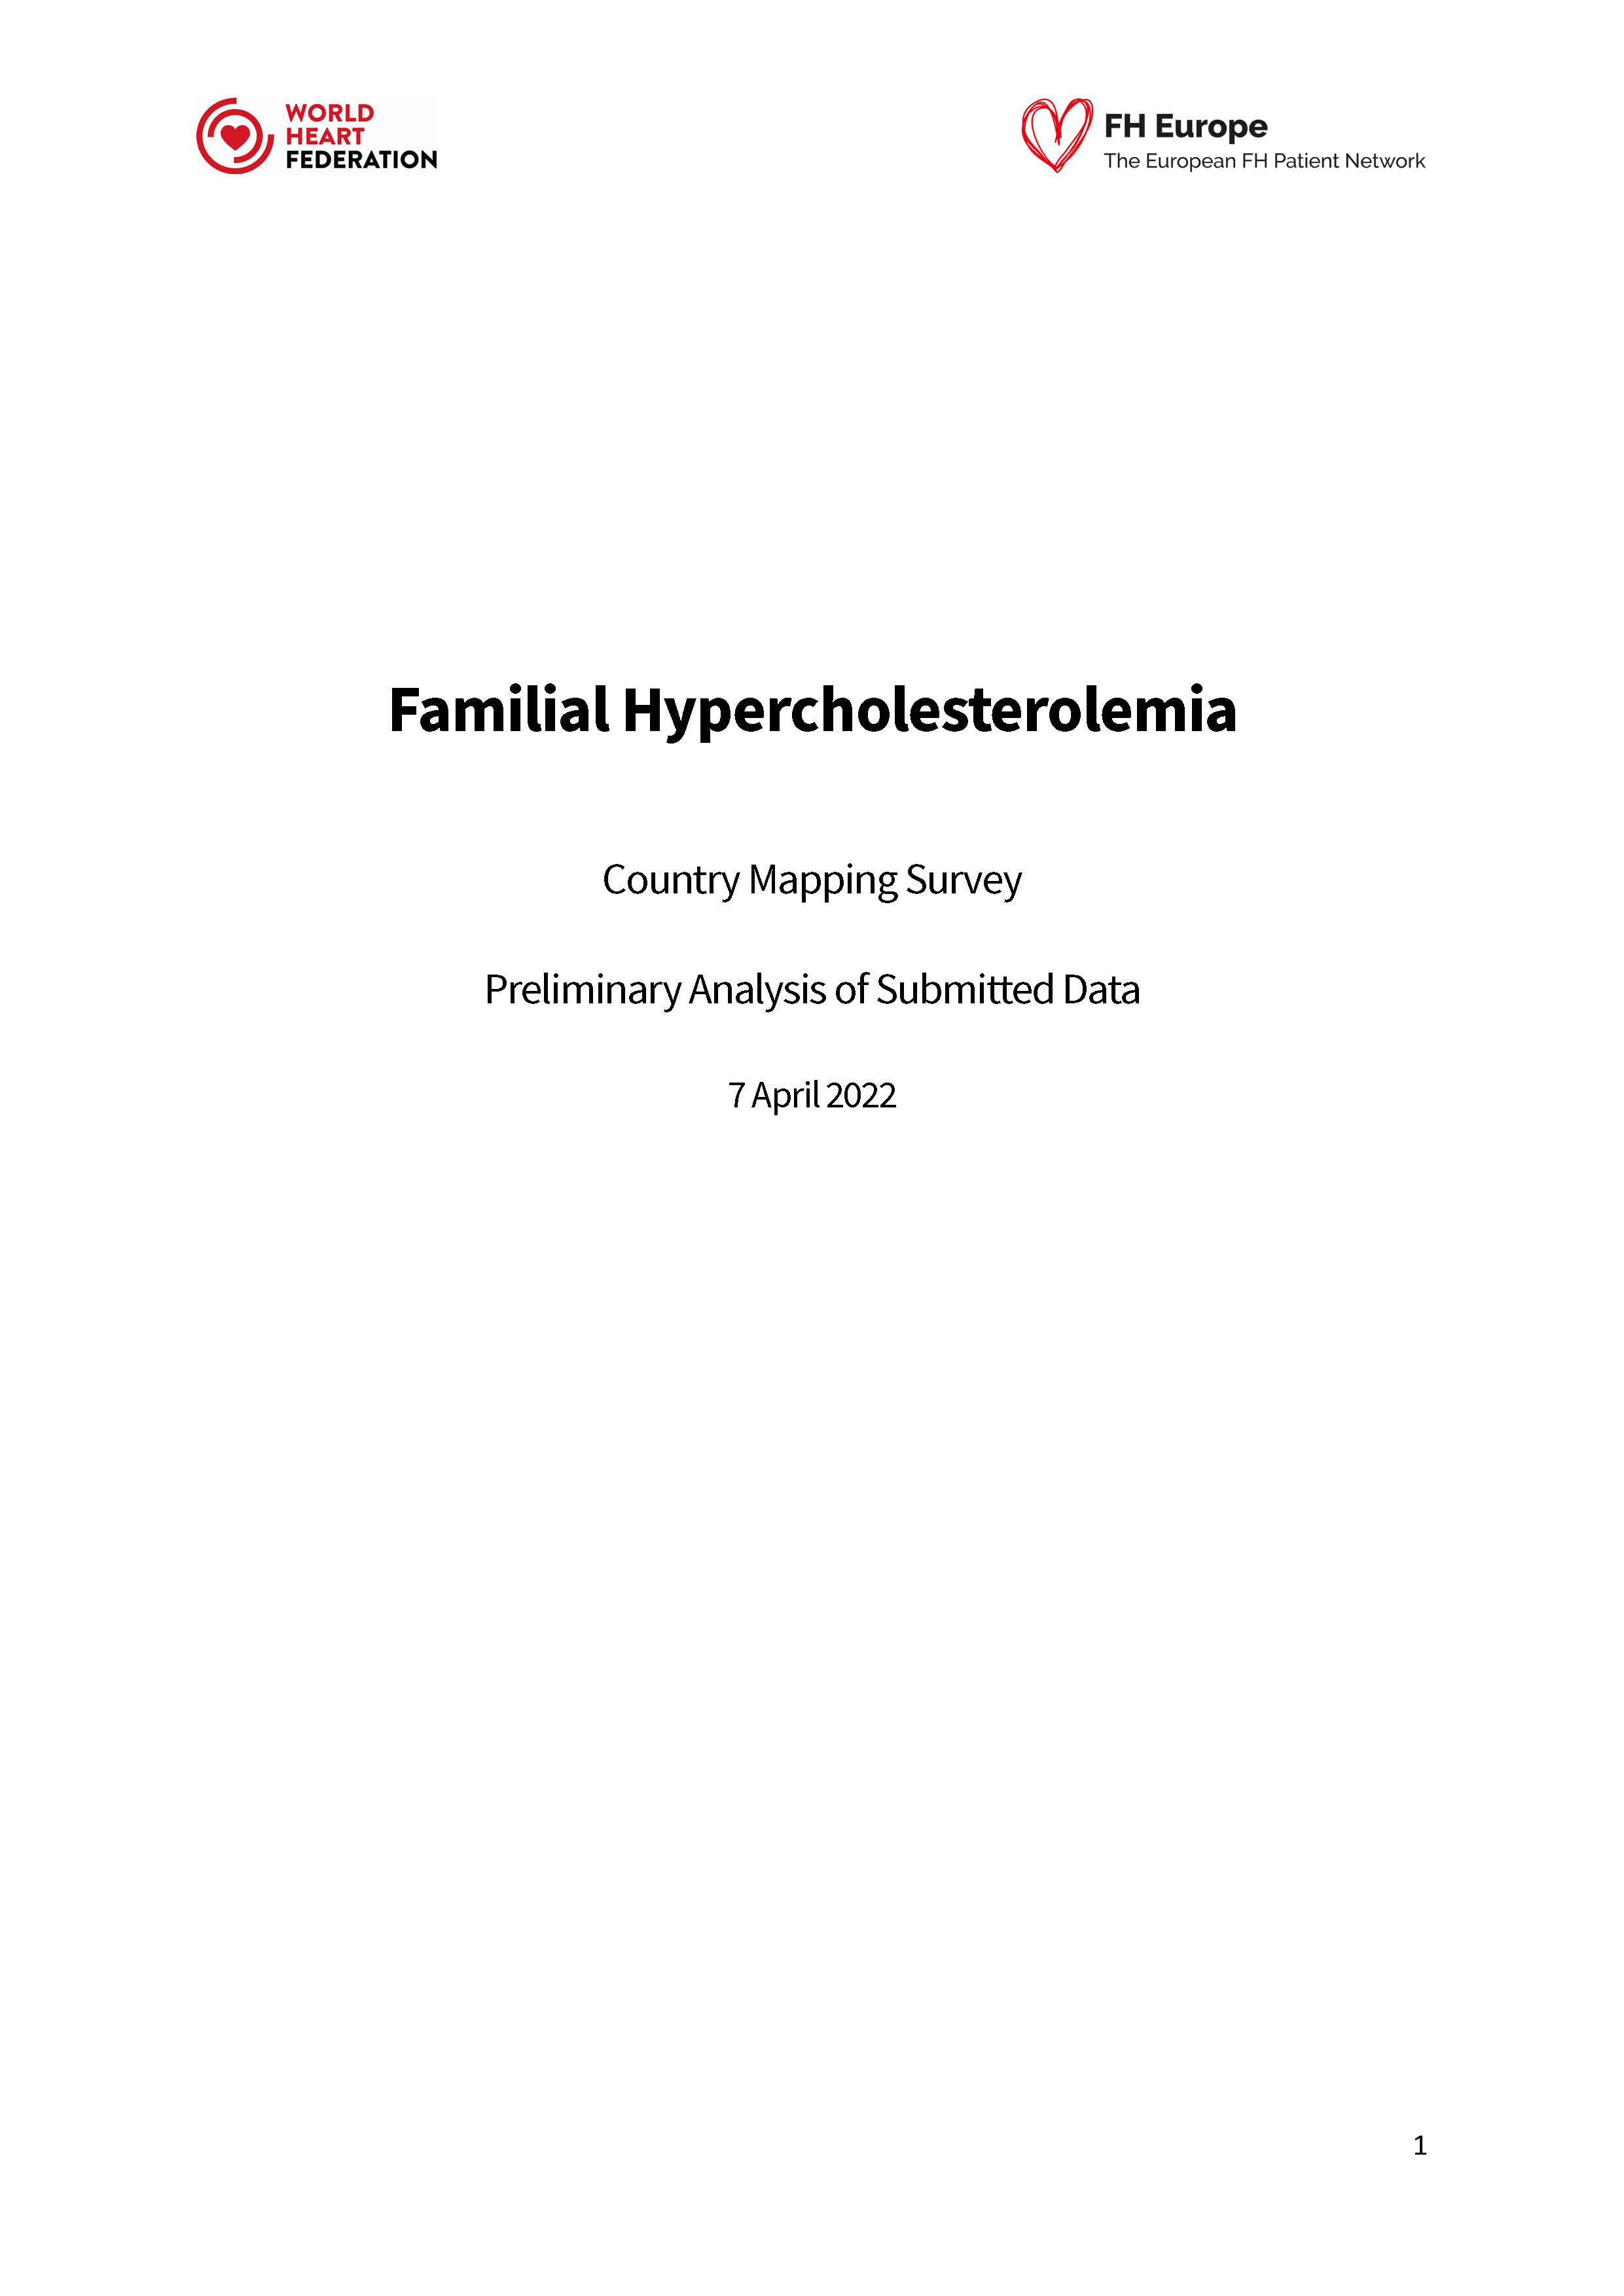 Familial Hypercholesterolemia data report